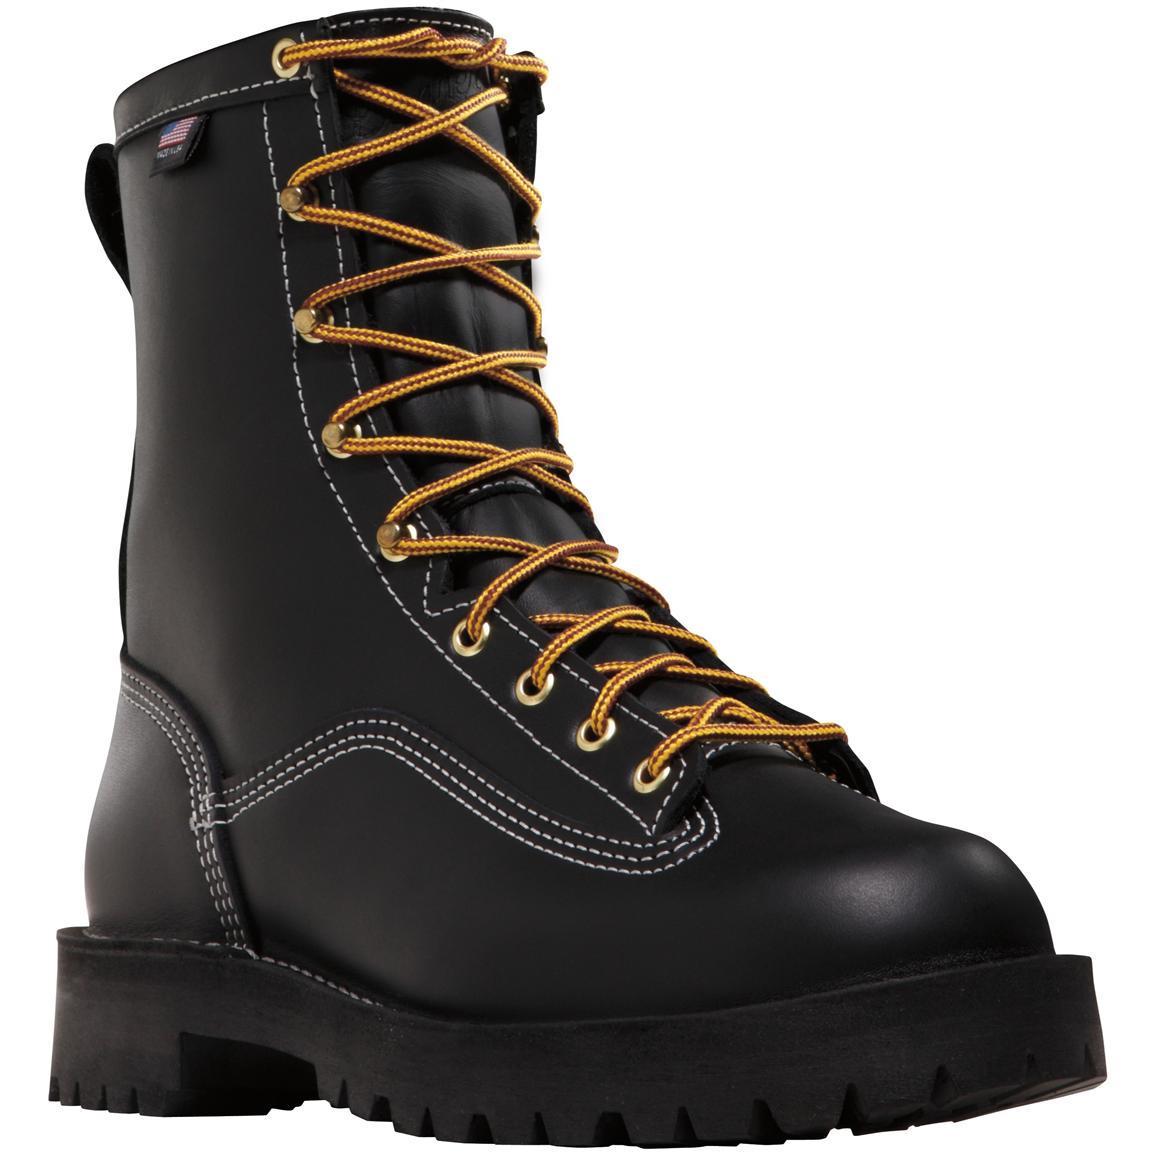 Men's Danner® 8 inch Non-Metallic Safety Toe Super Rain Forest™ Work Boots